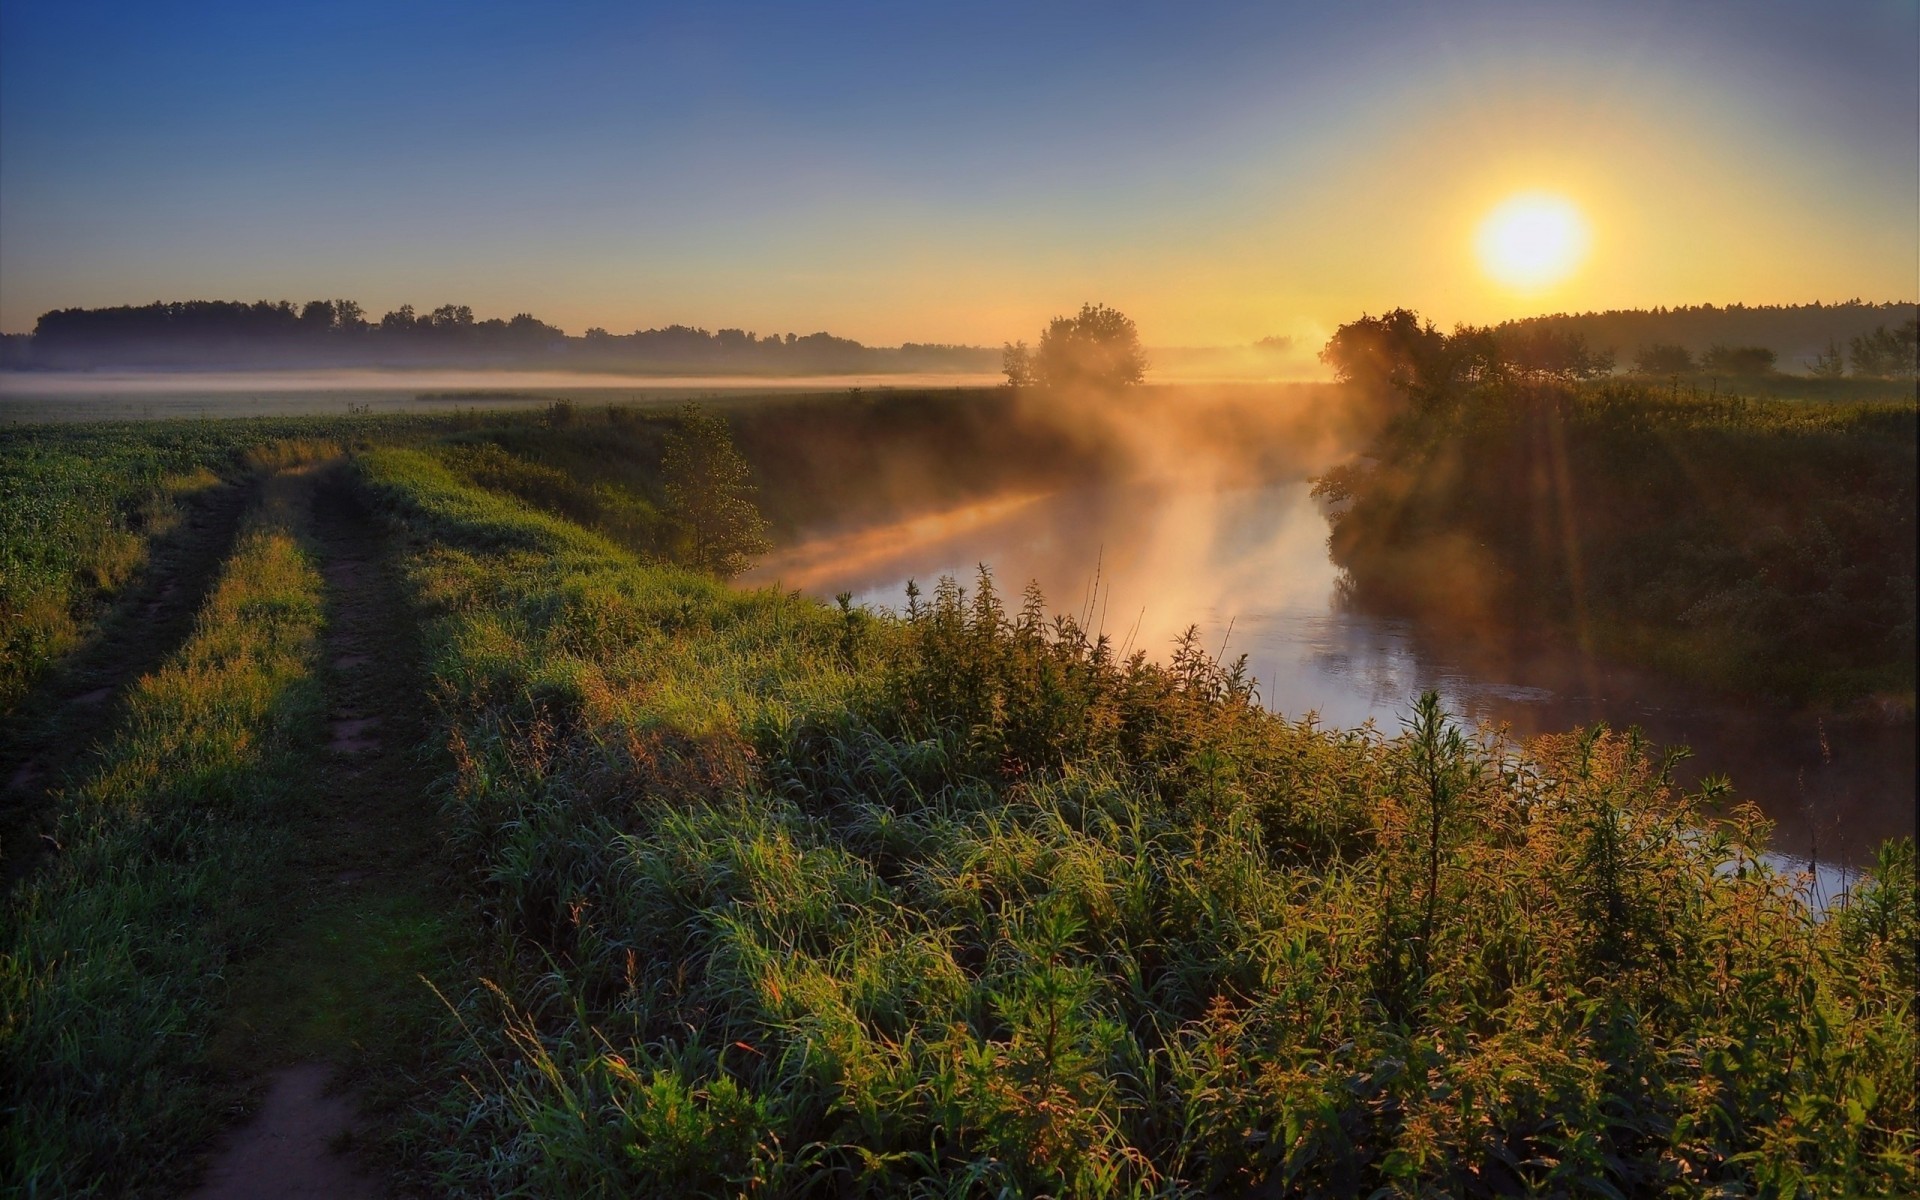 утро трава река грязь туман центральный парк солнце дорога мгла